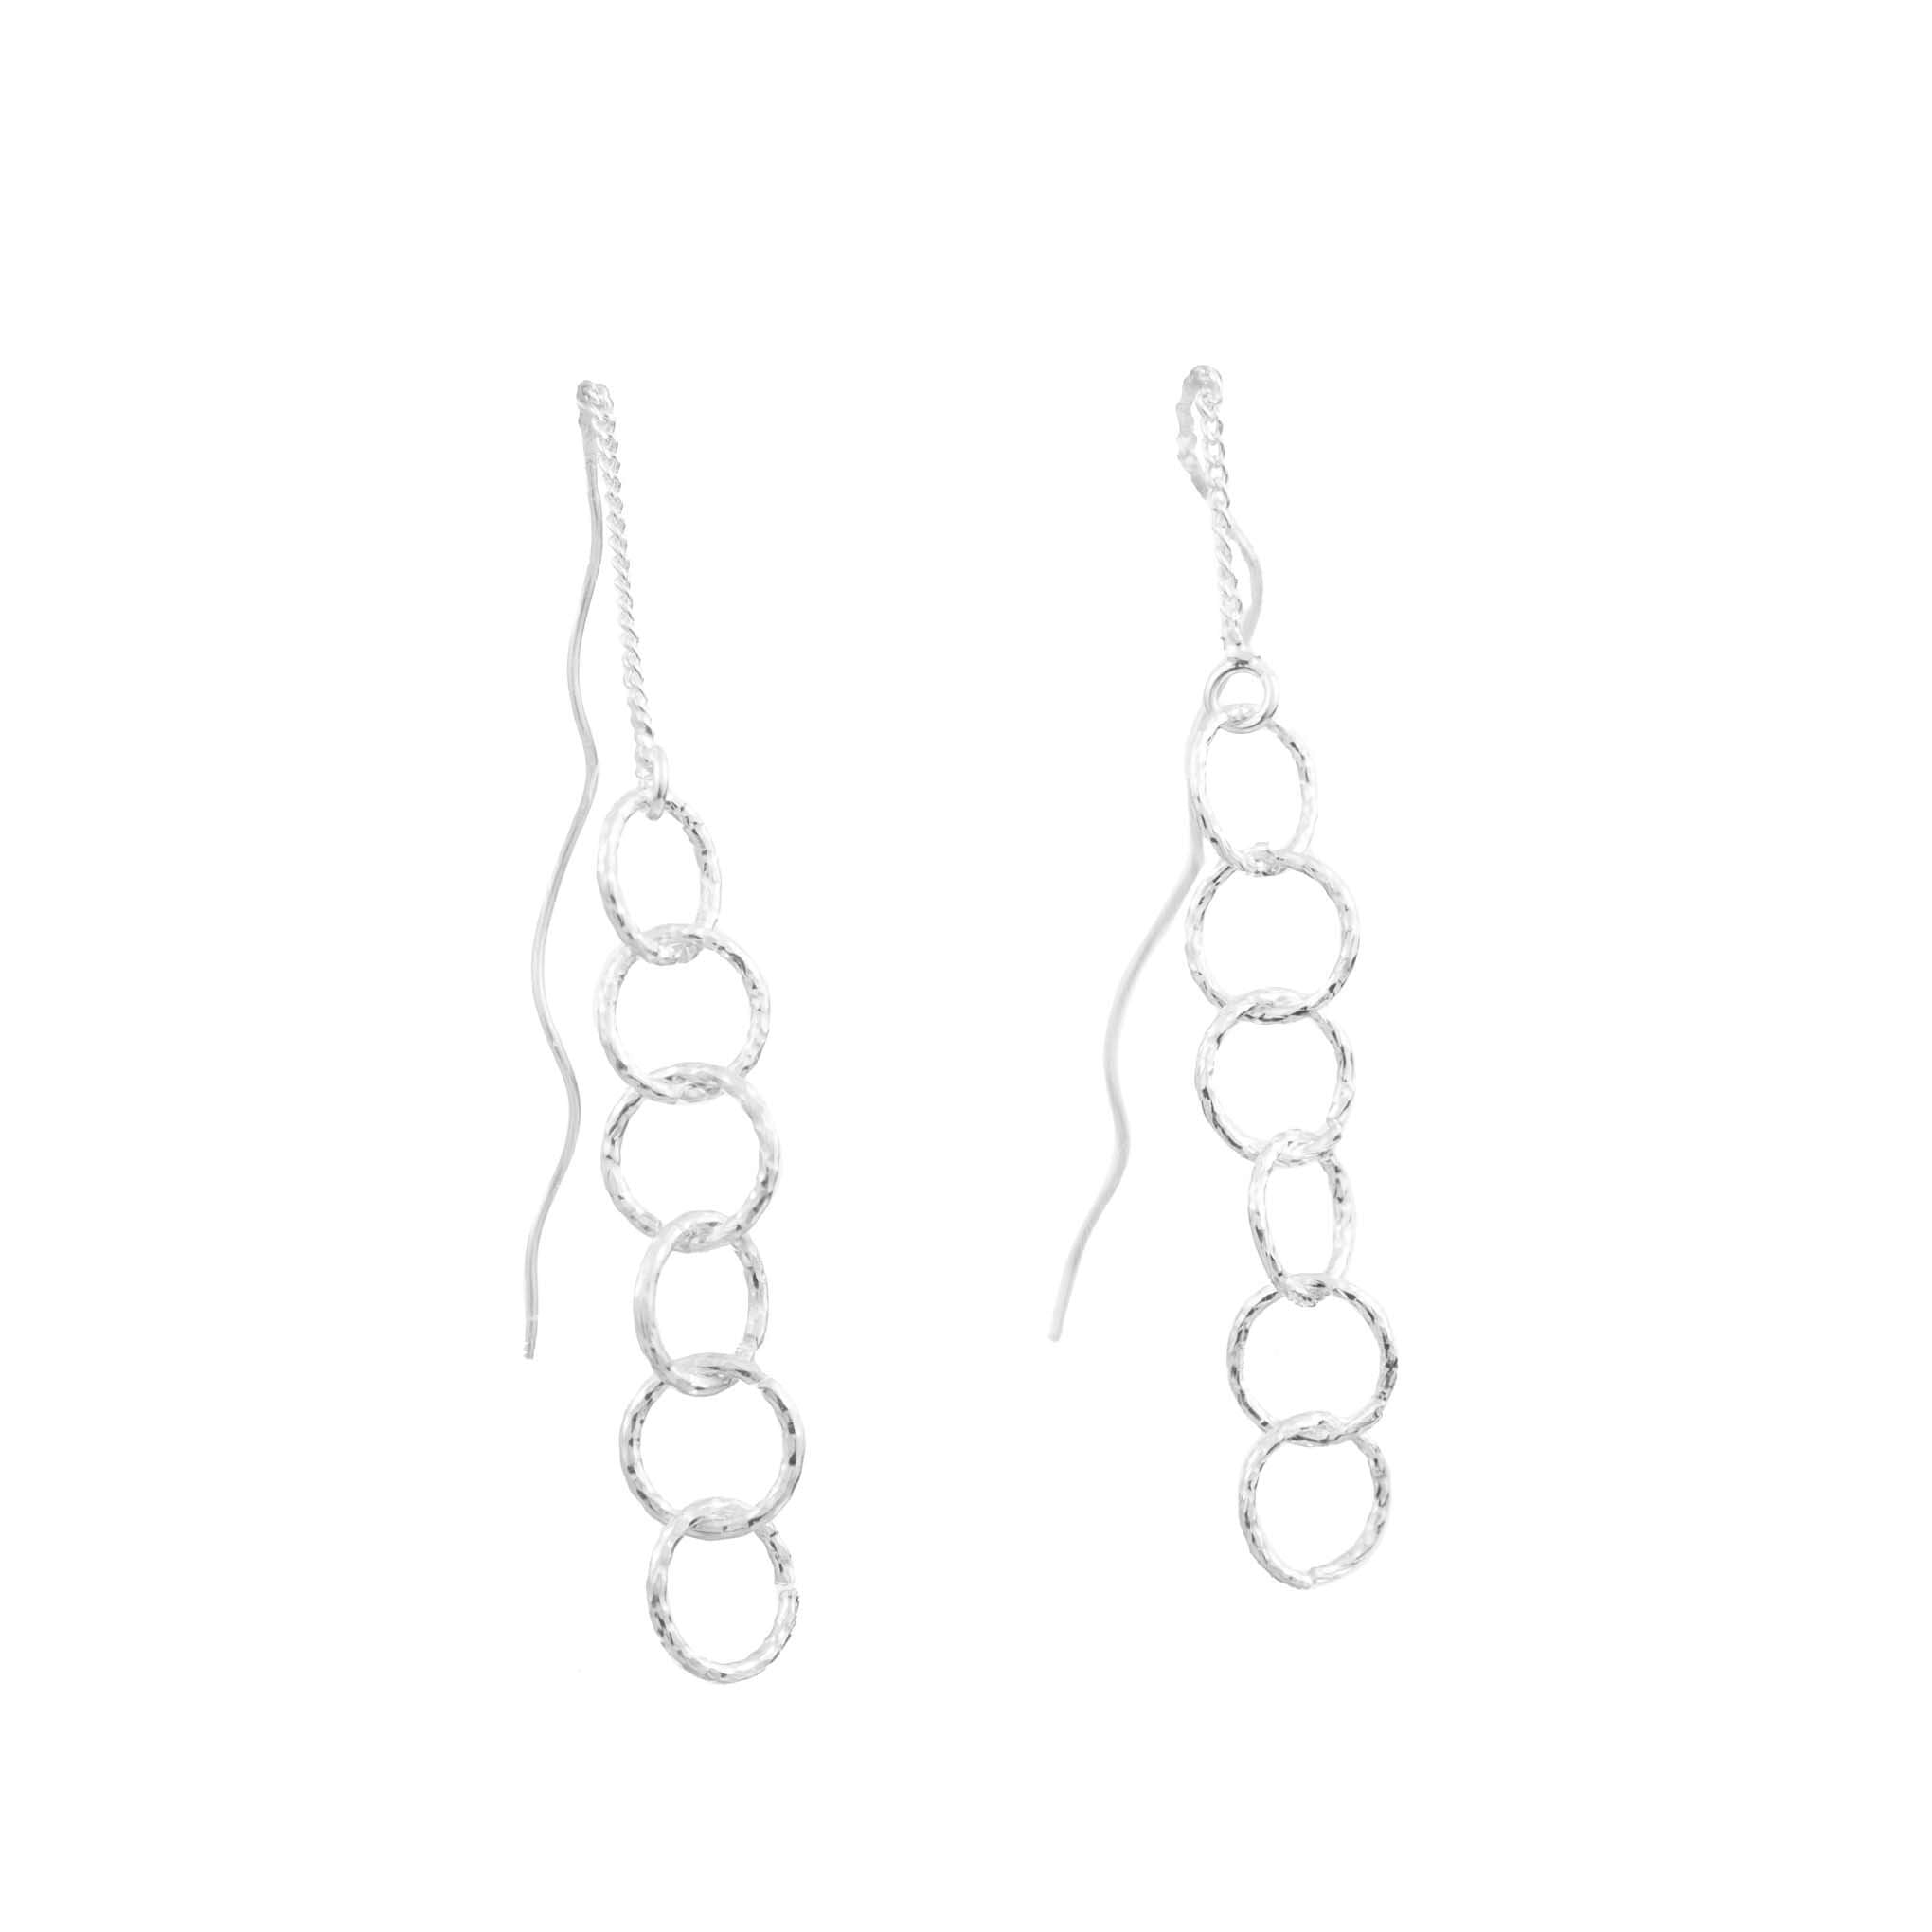 Silver earrings interlocking silver circles